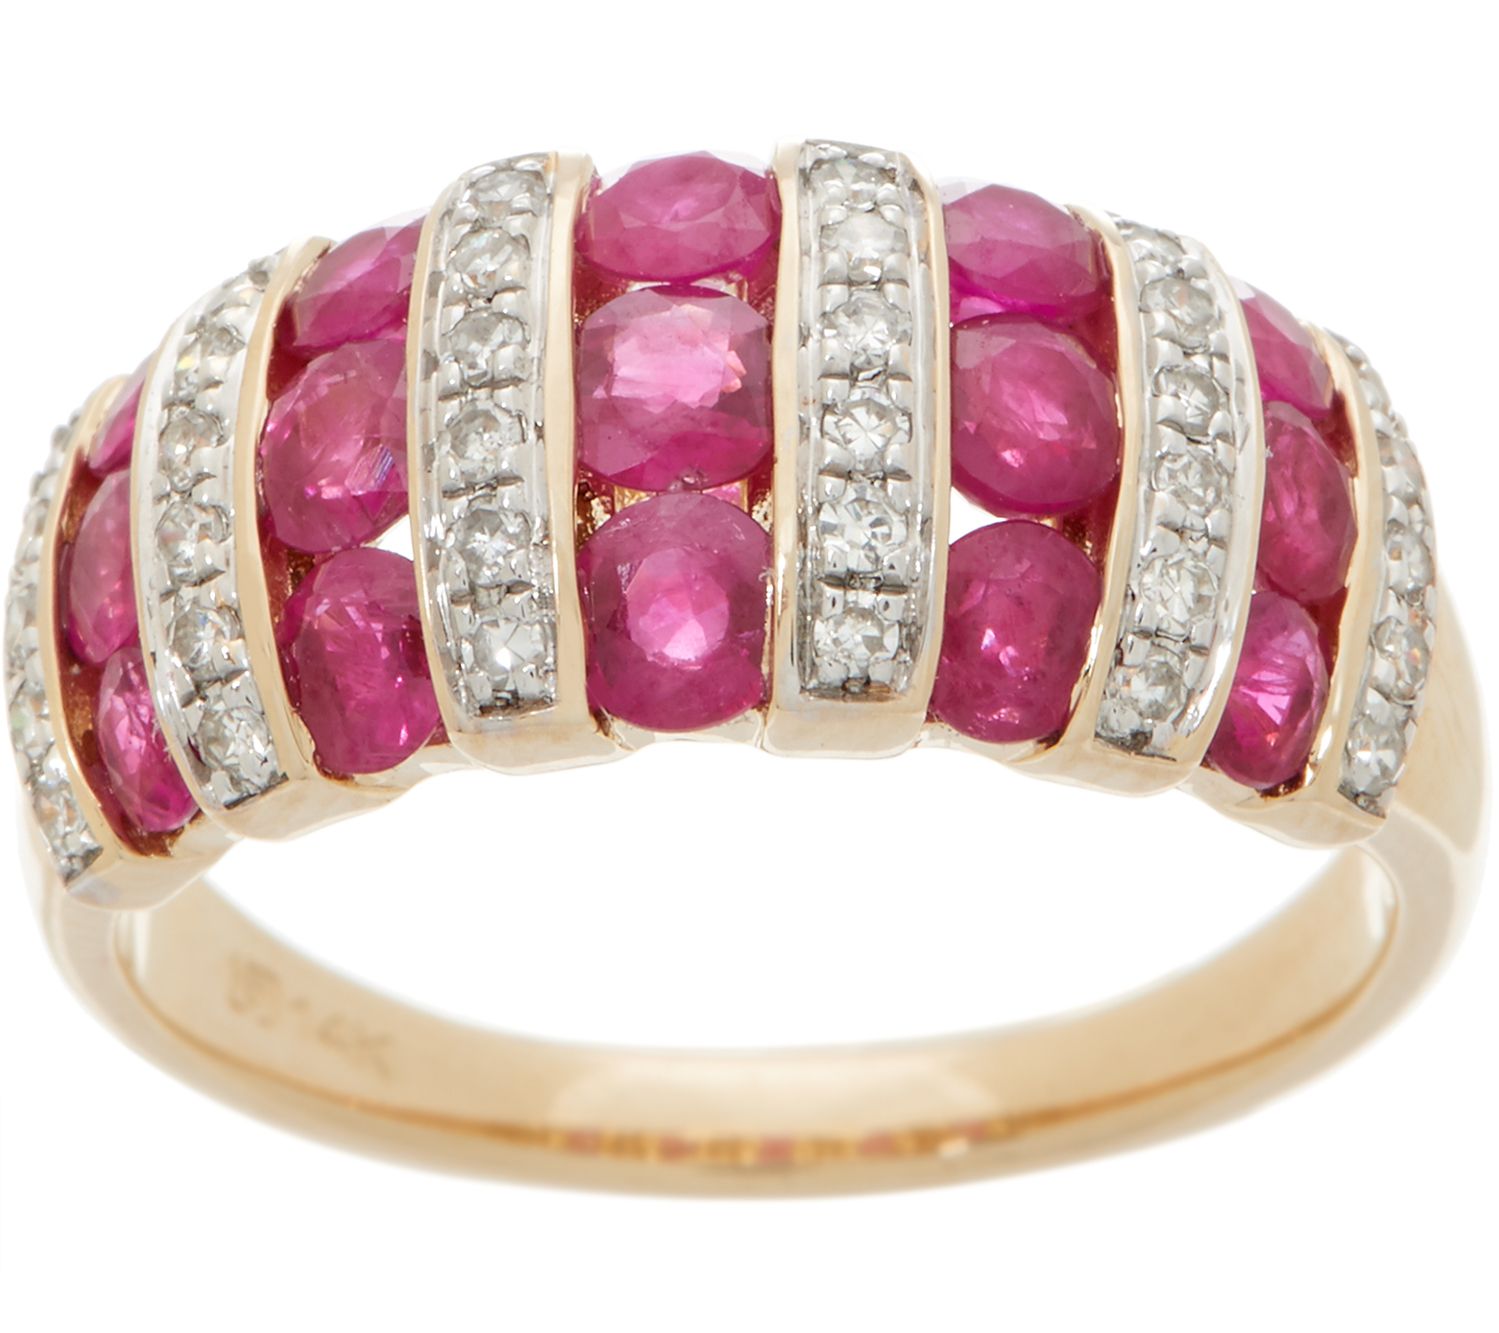 Gemstone Jewelry − Rings, Earrings, Pendants, Etc — QVC.com